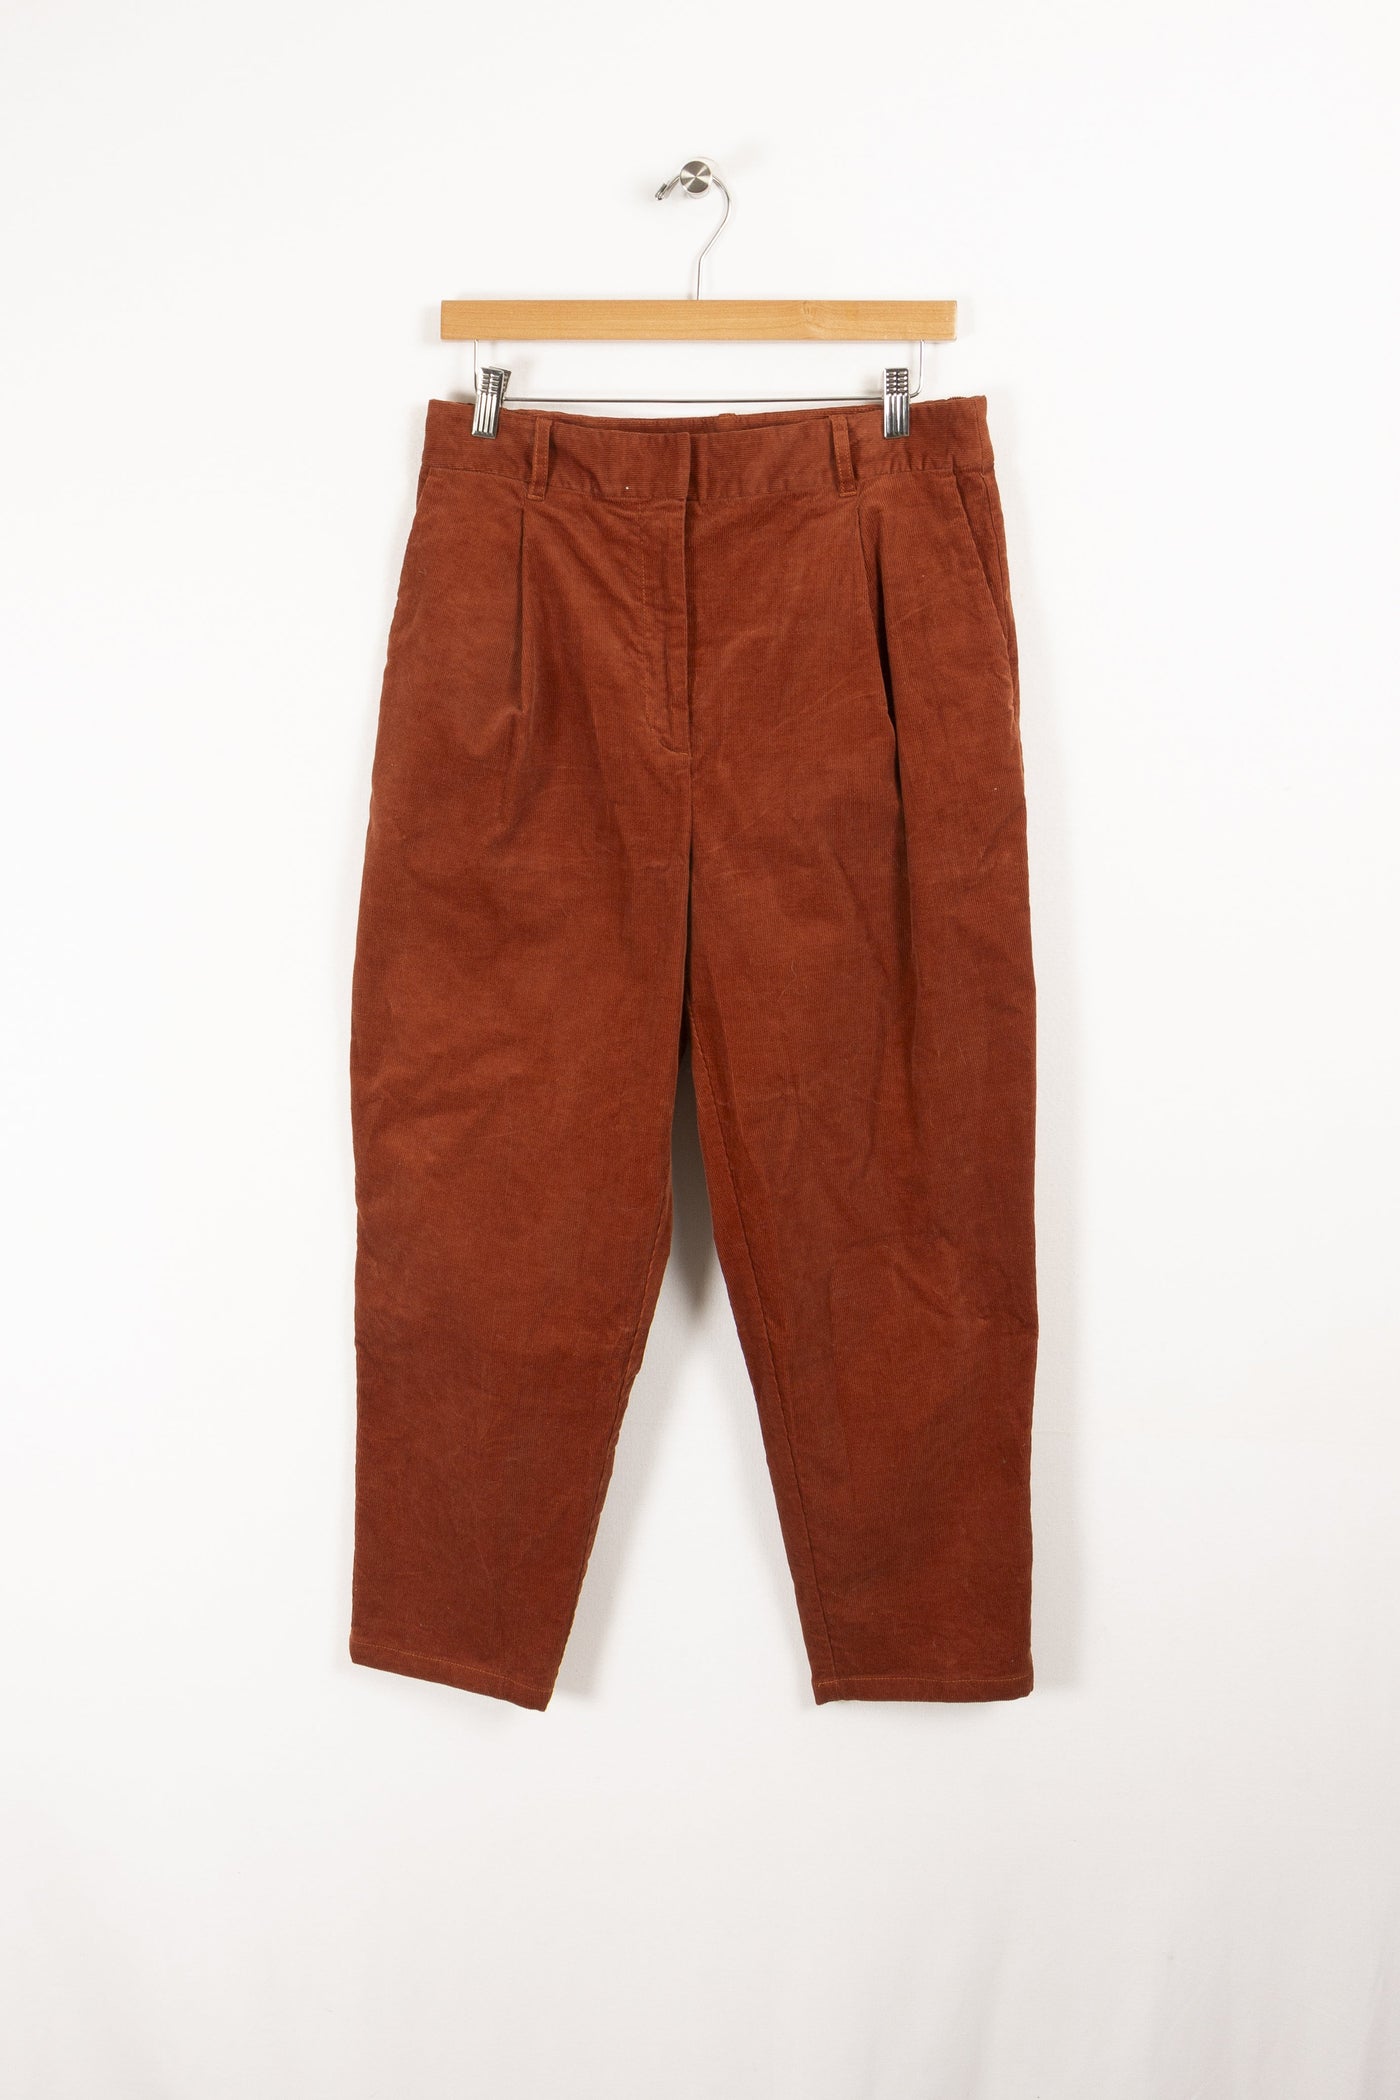 Pantalon marron - Taille L/40